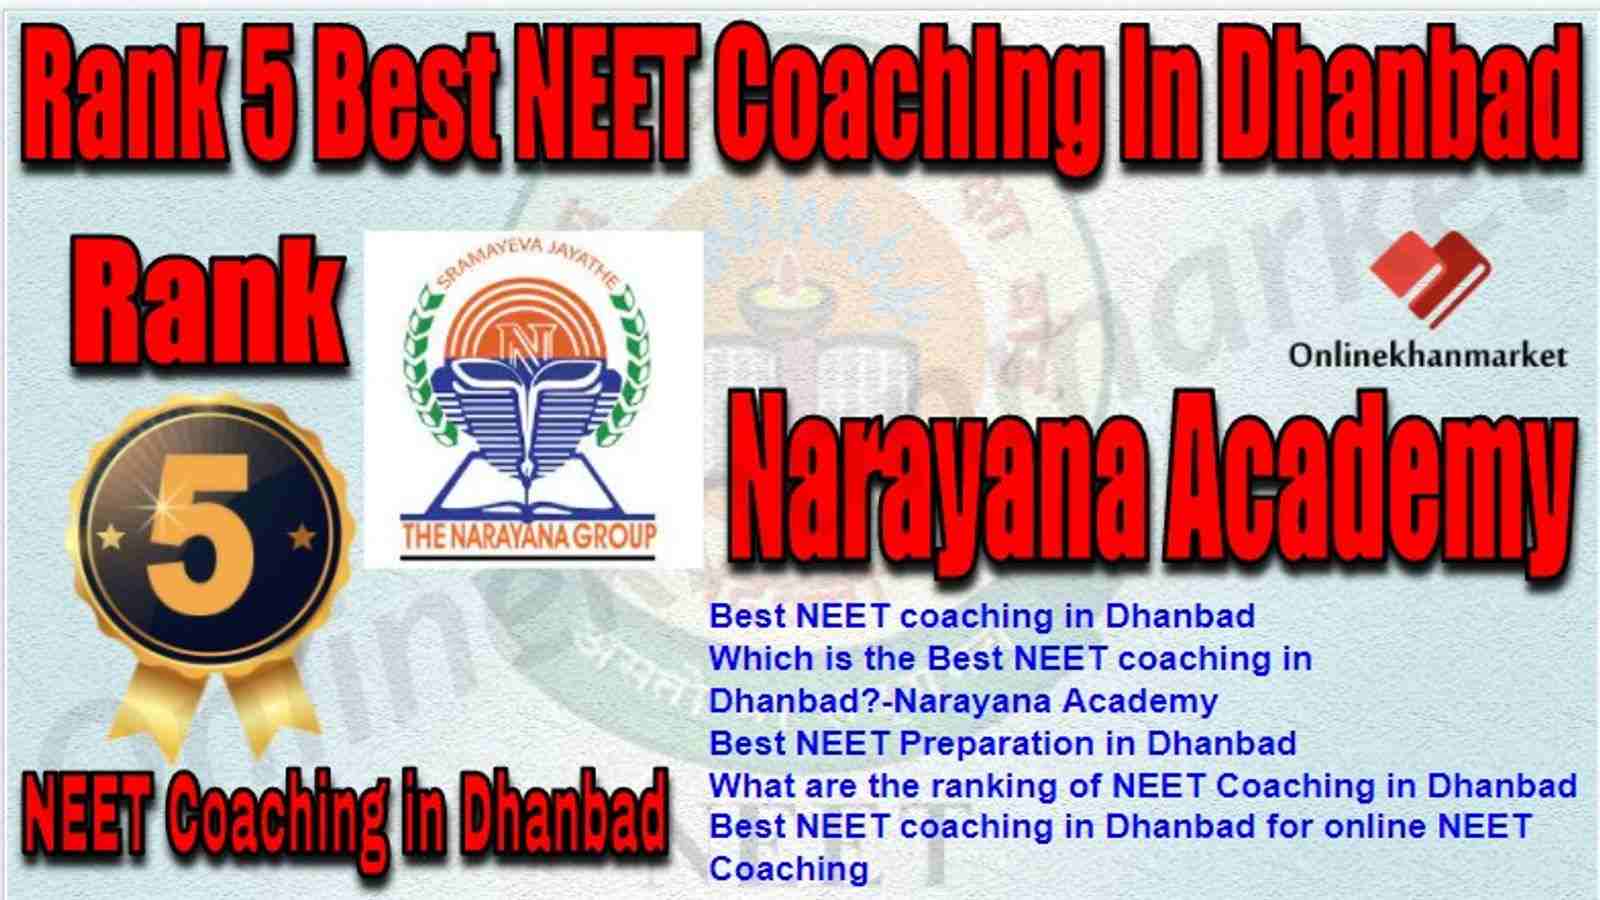 Rank 5 Best NEET Coaching dhanbad